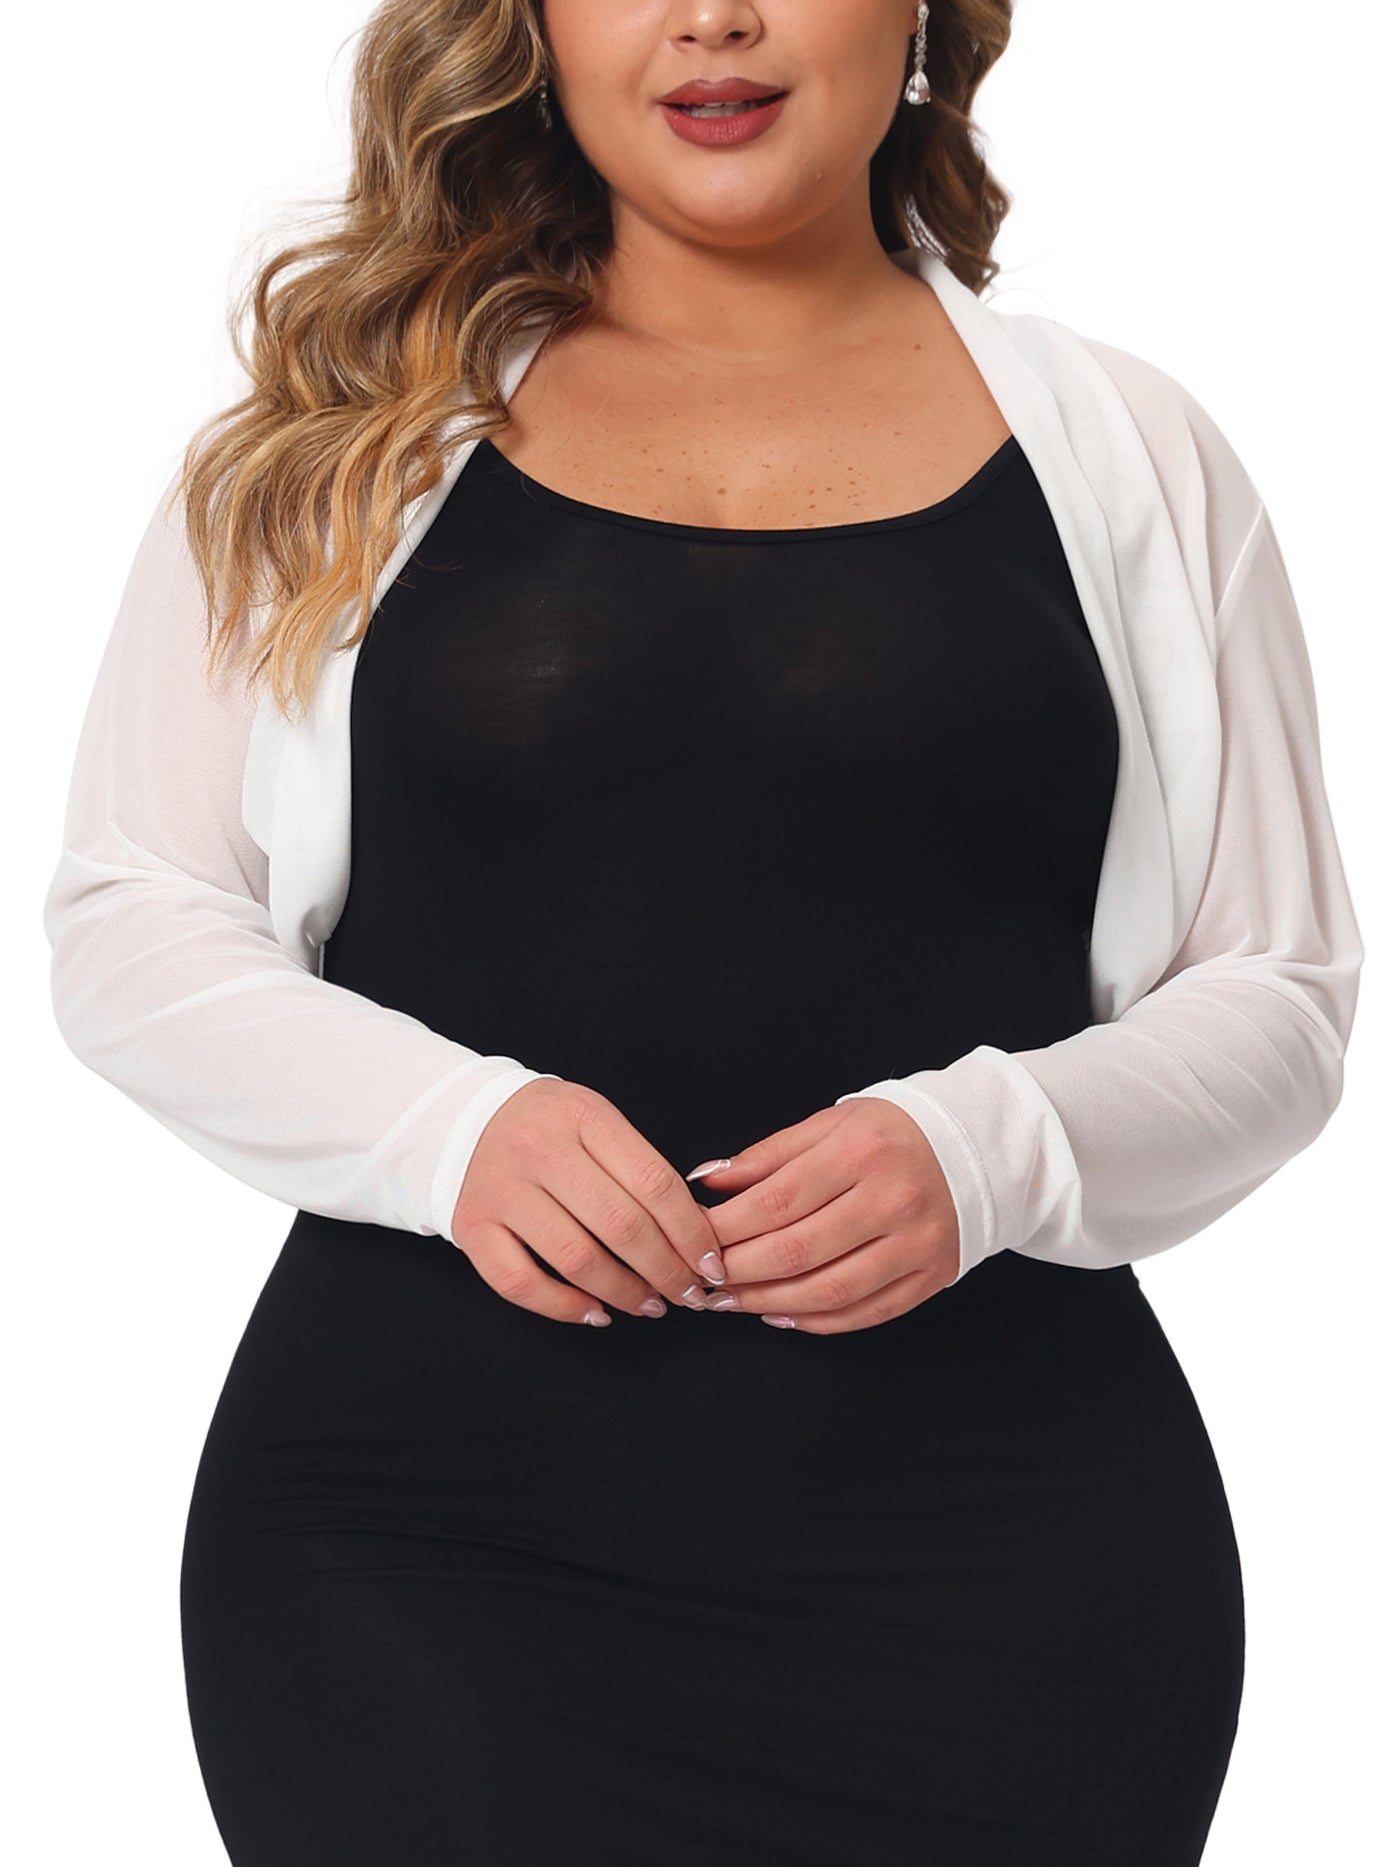 Bublédon Plus Size Mesh Crop Cardigans for Women Long Sleeve Open Front See Through Sheer Bolero Shrug Top